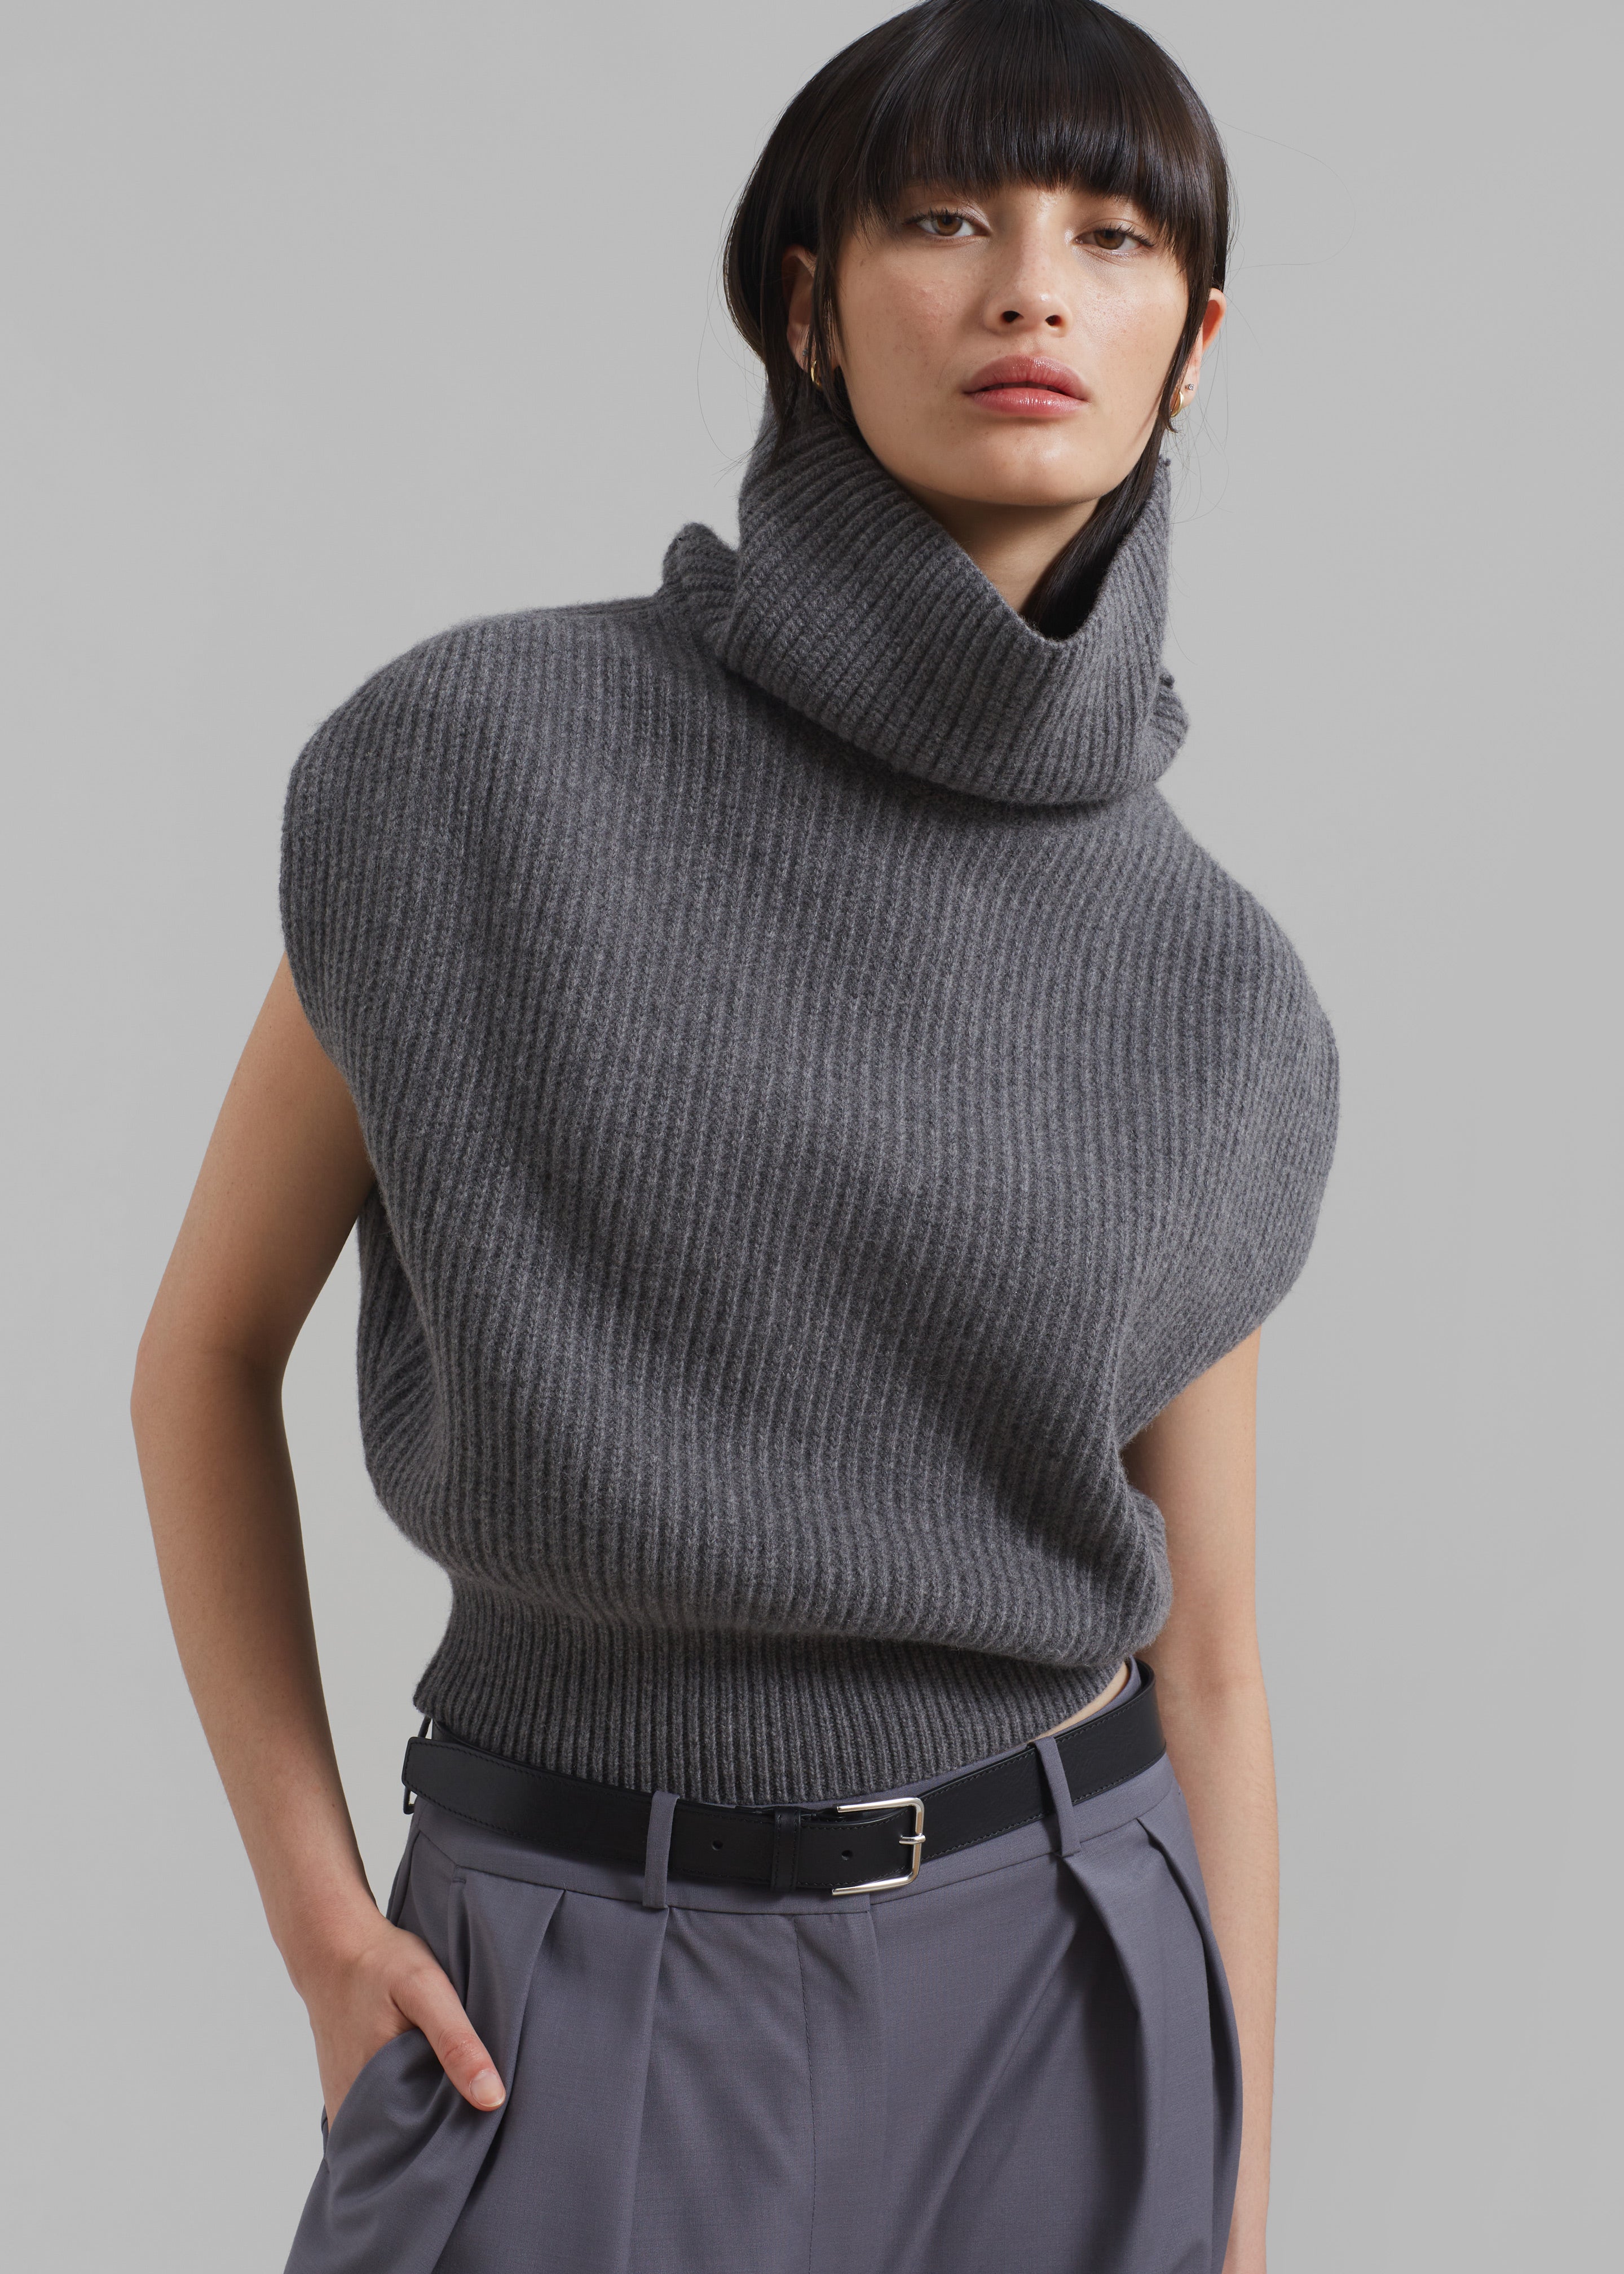  Grey Turtleneck Sweater